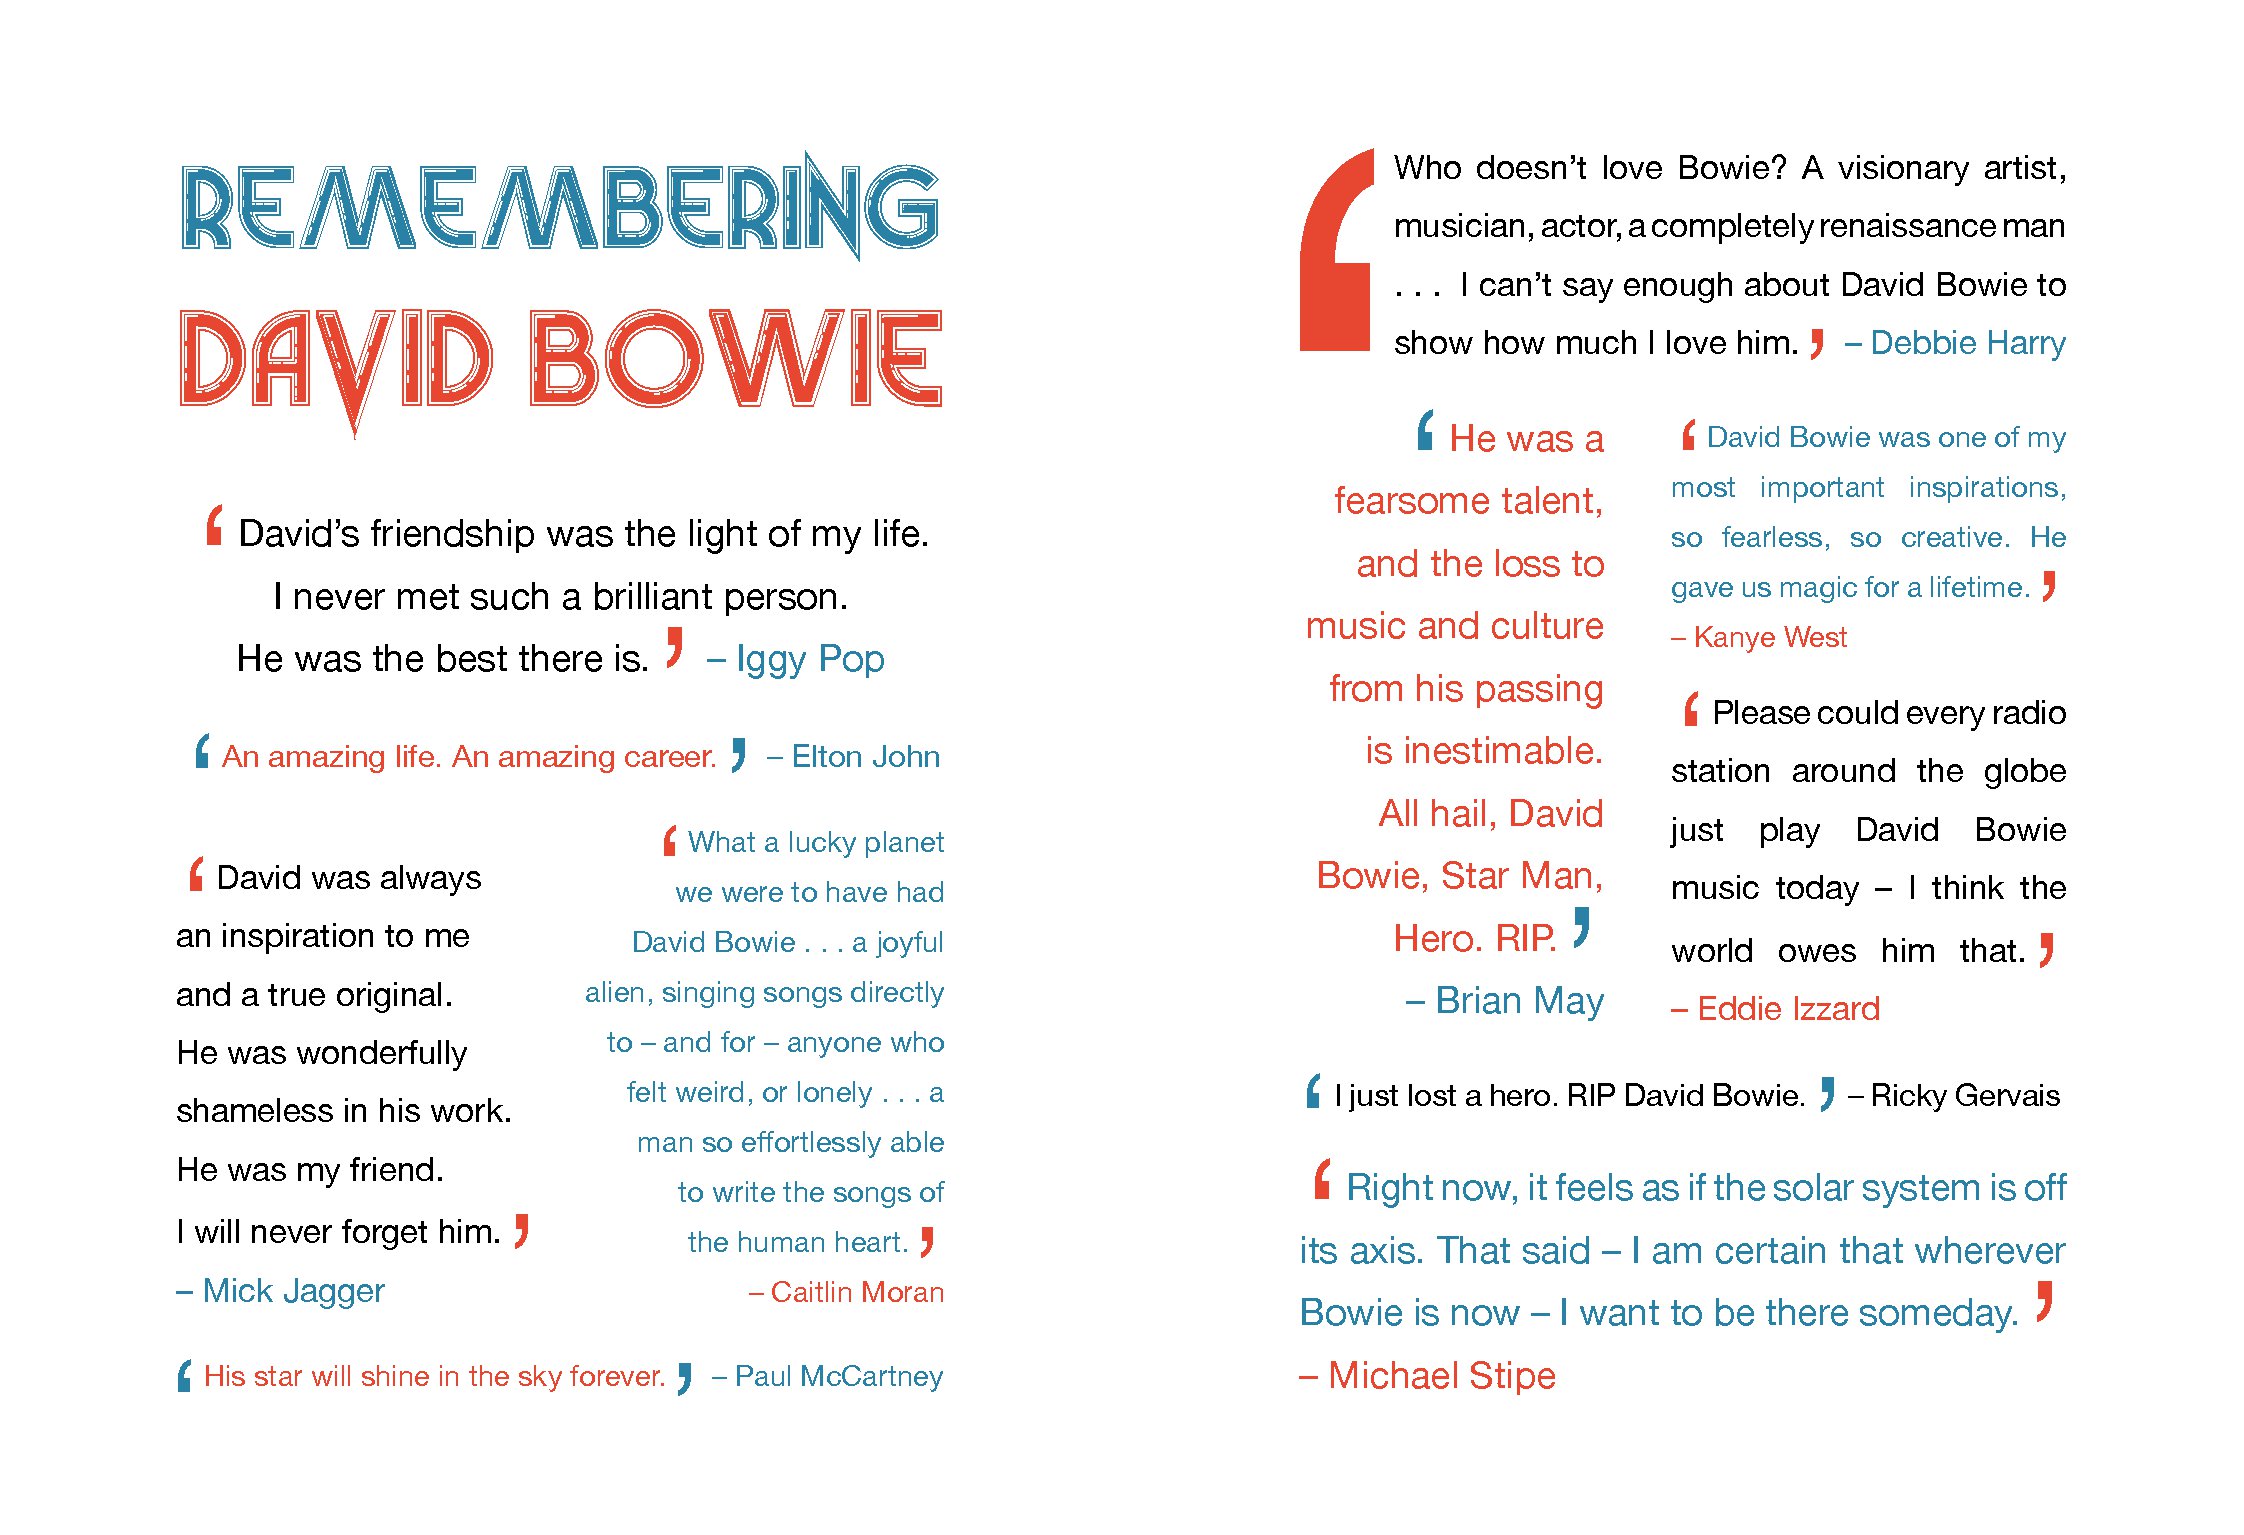 David Bowie: Starman: A Coloring Book